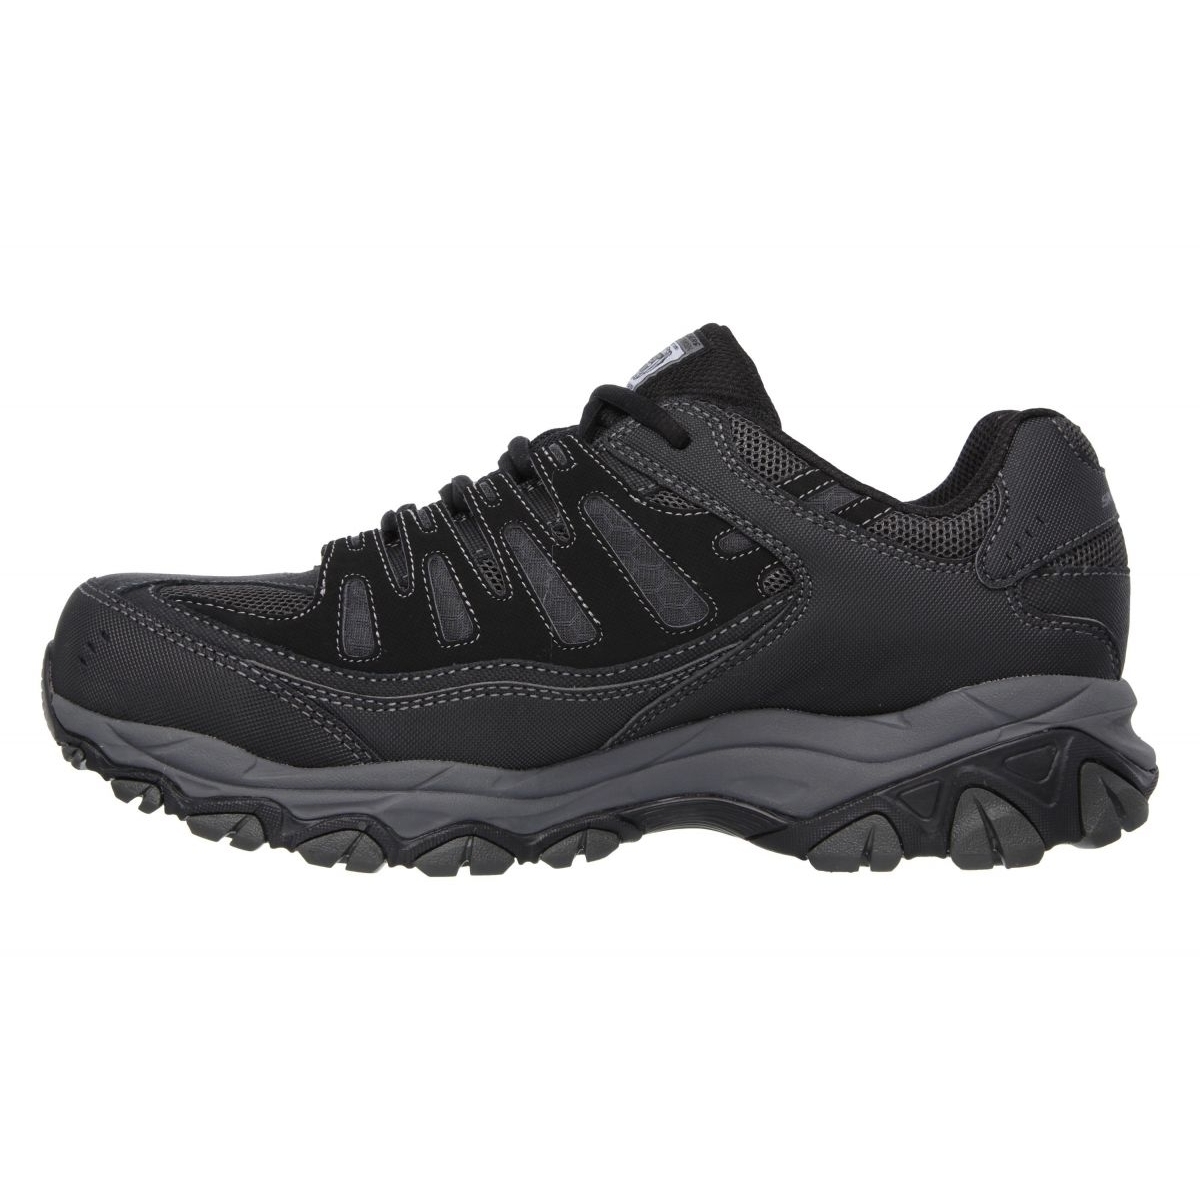 Skechers Men's Cankton-U Industrial Shoe 7 BLACK/CHARCOAL - BLACK/CHARCOAL, 11.5 Wide